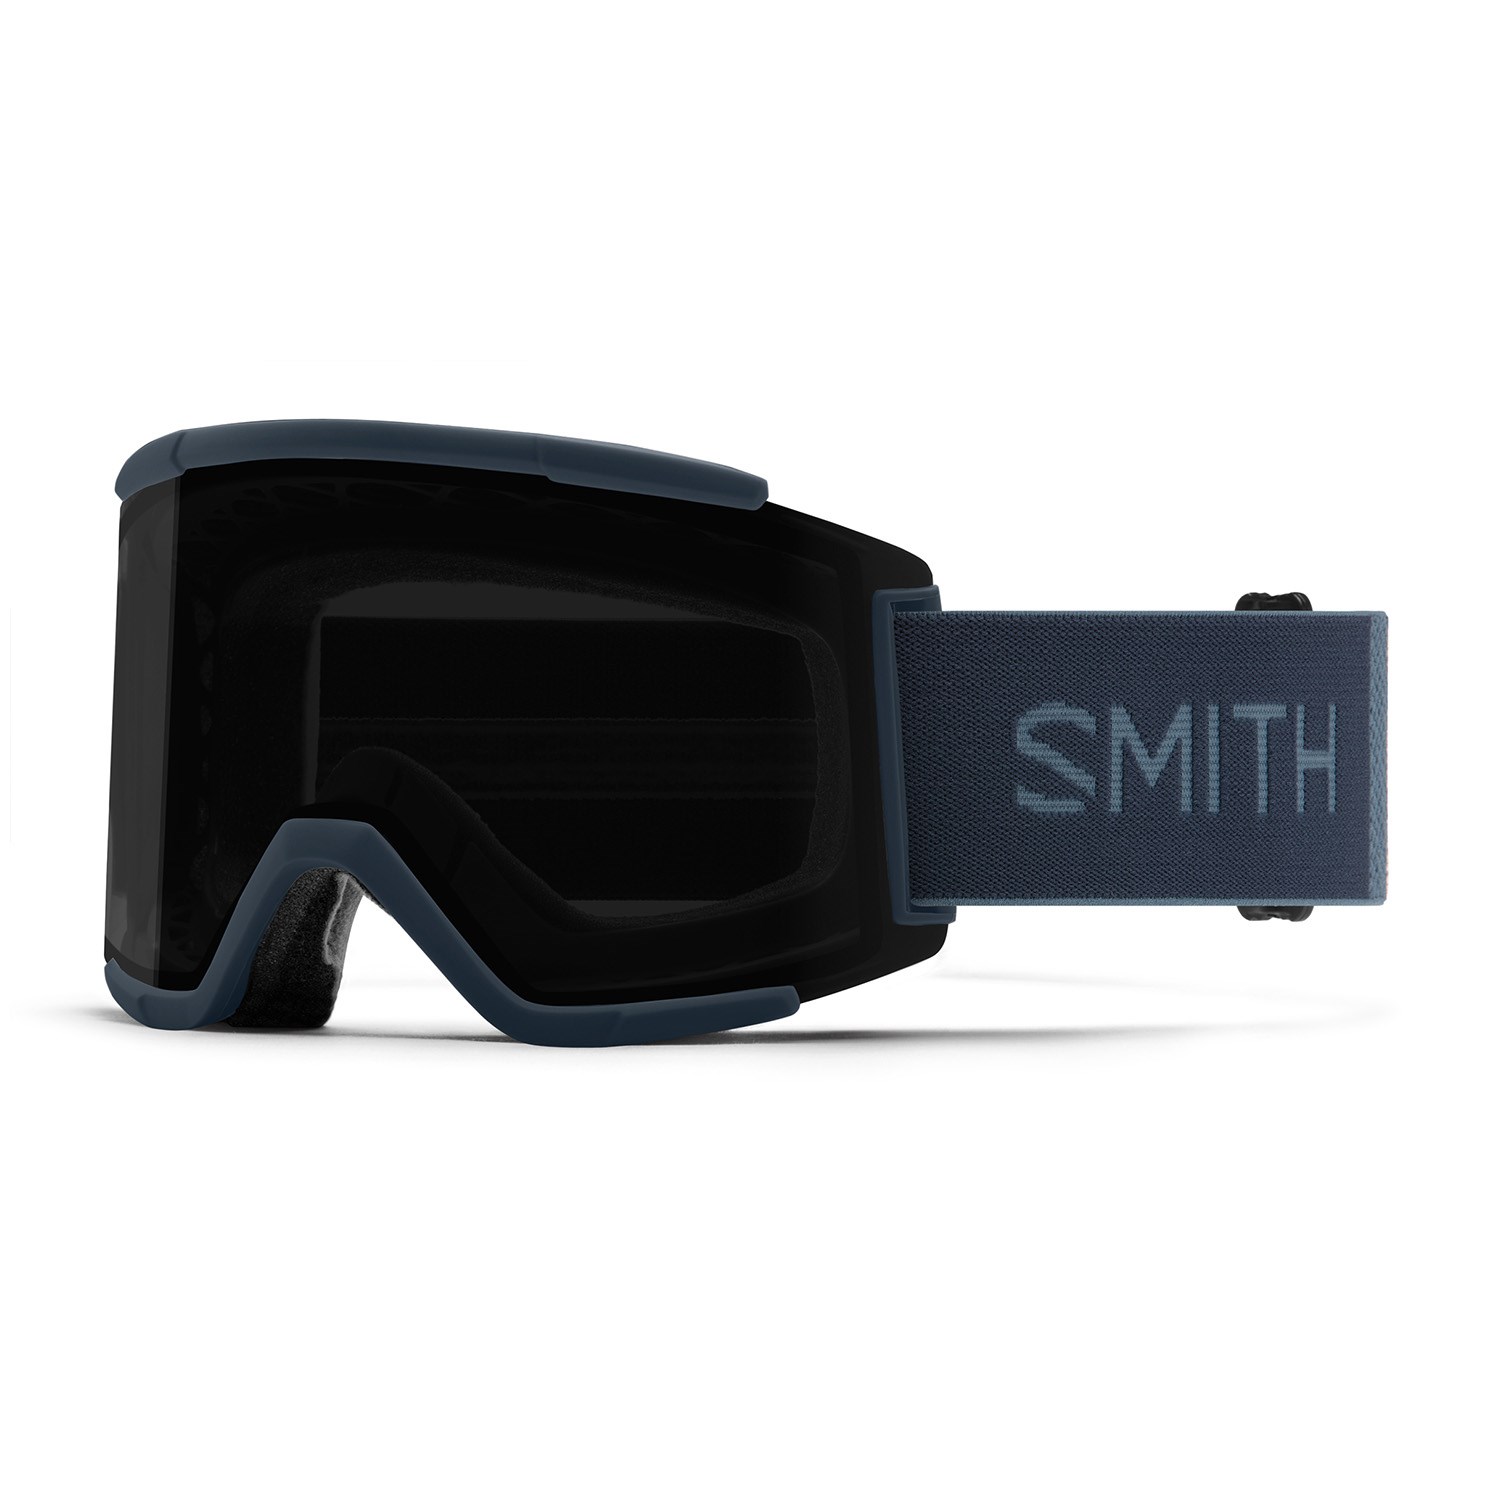 NEW SMITH Squad XL CLEAR Lens 84% VLT Low Light Squad XL  Goggle Compatible 